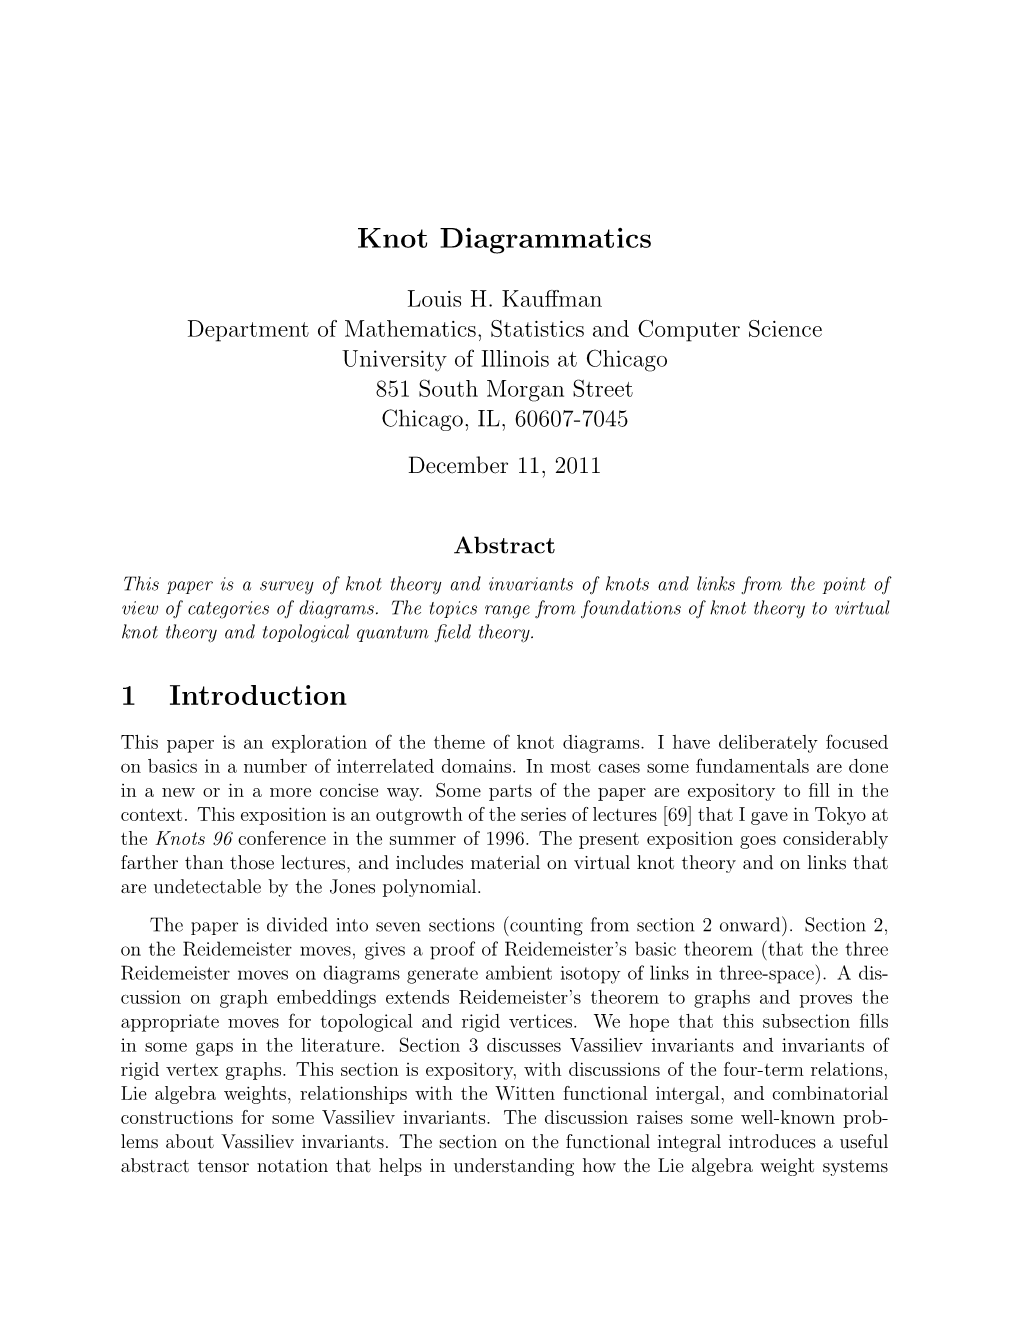 Knot Diagrammatics 1 Introduction